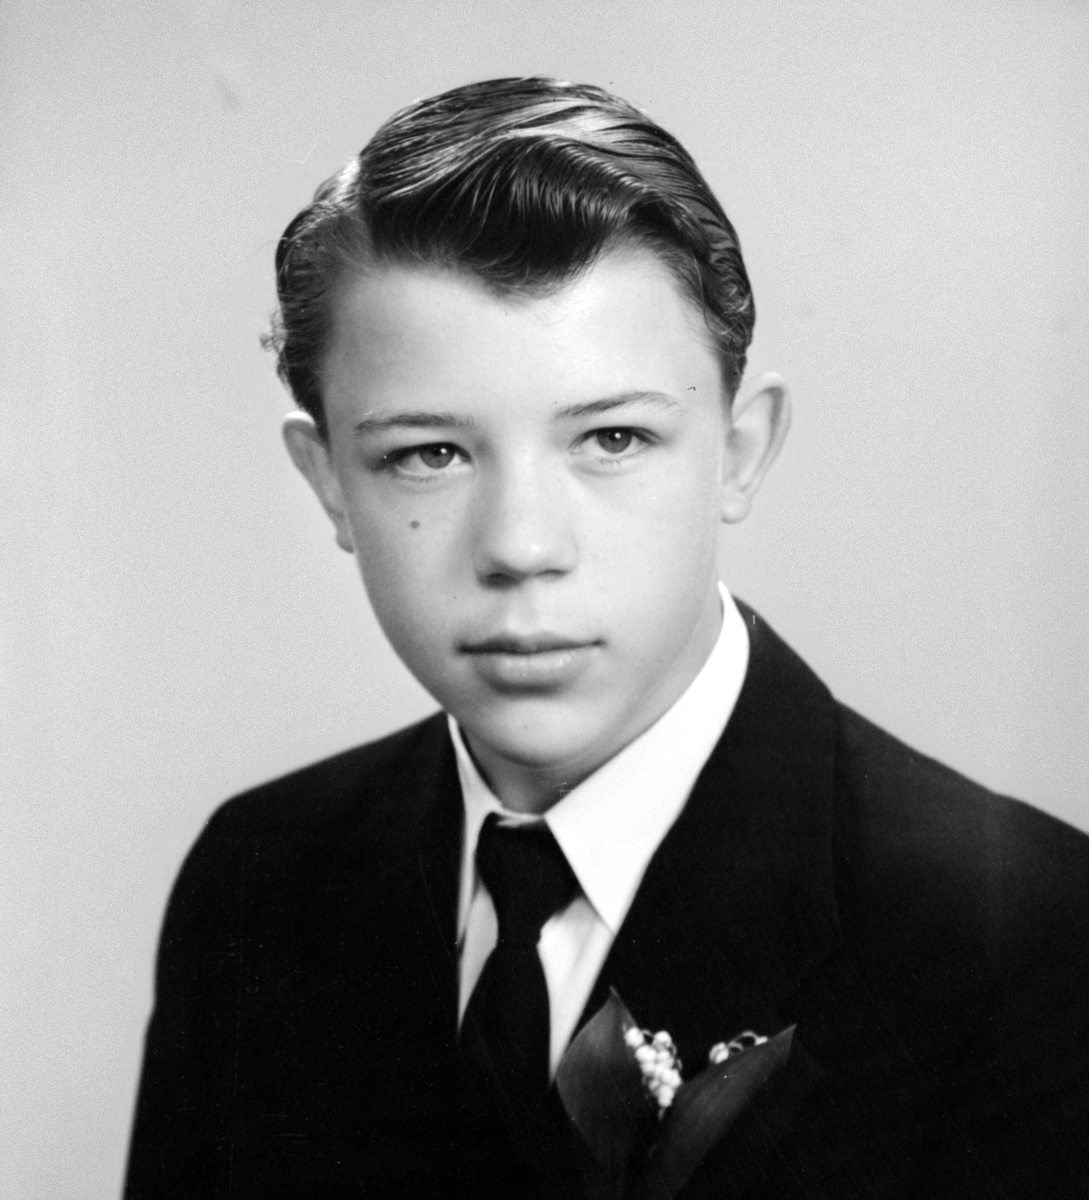 Konfirmanden Lars Andersson. Foto i maj 1950.
